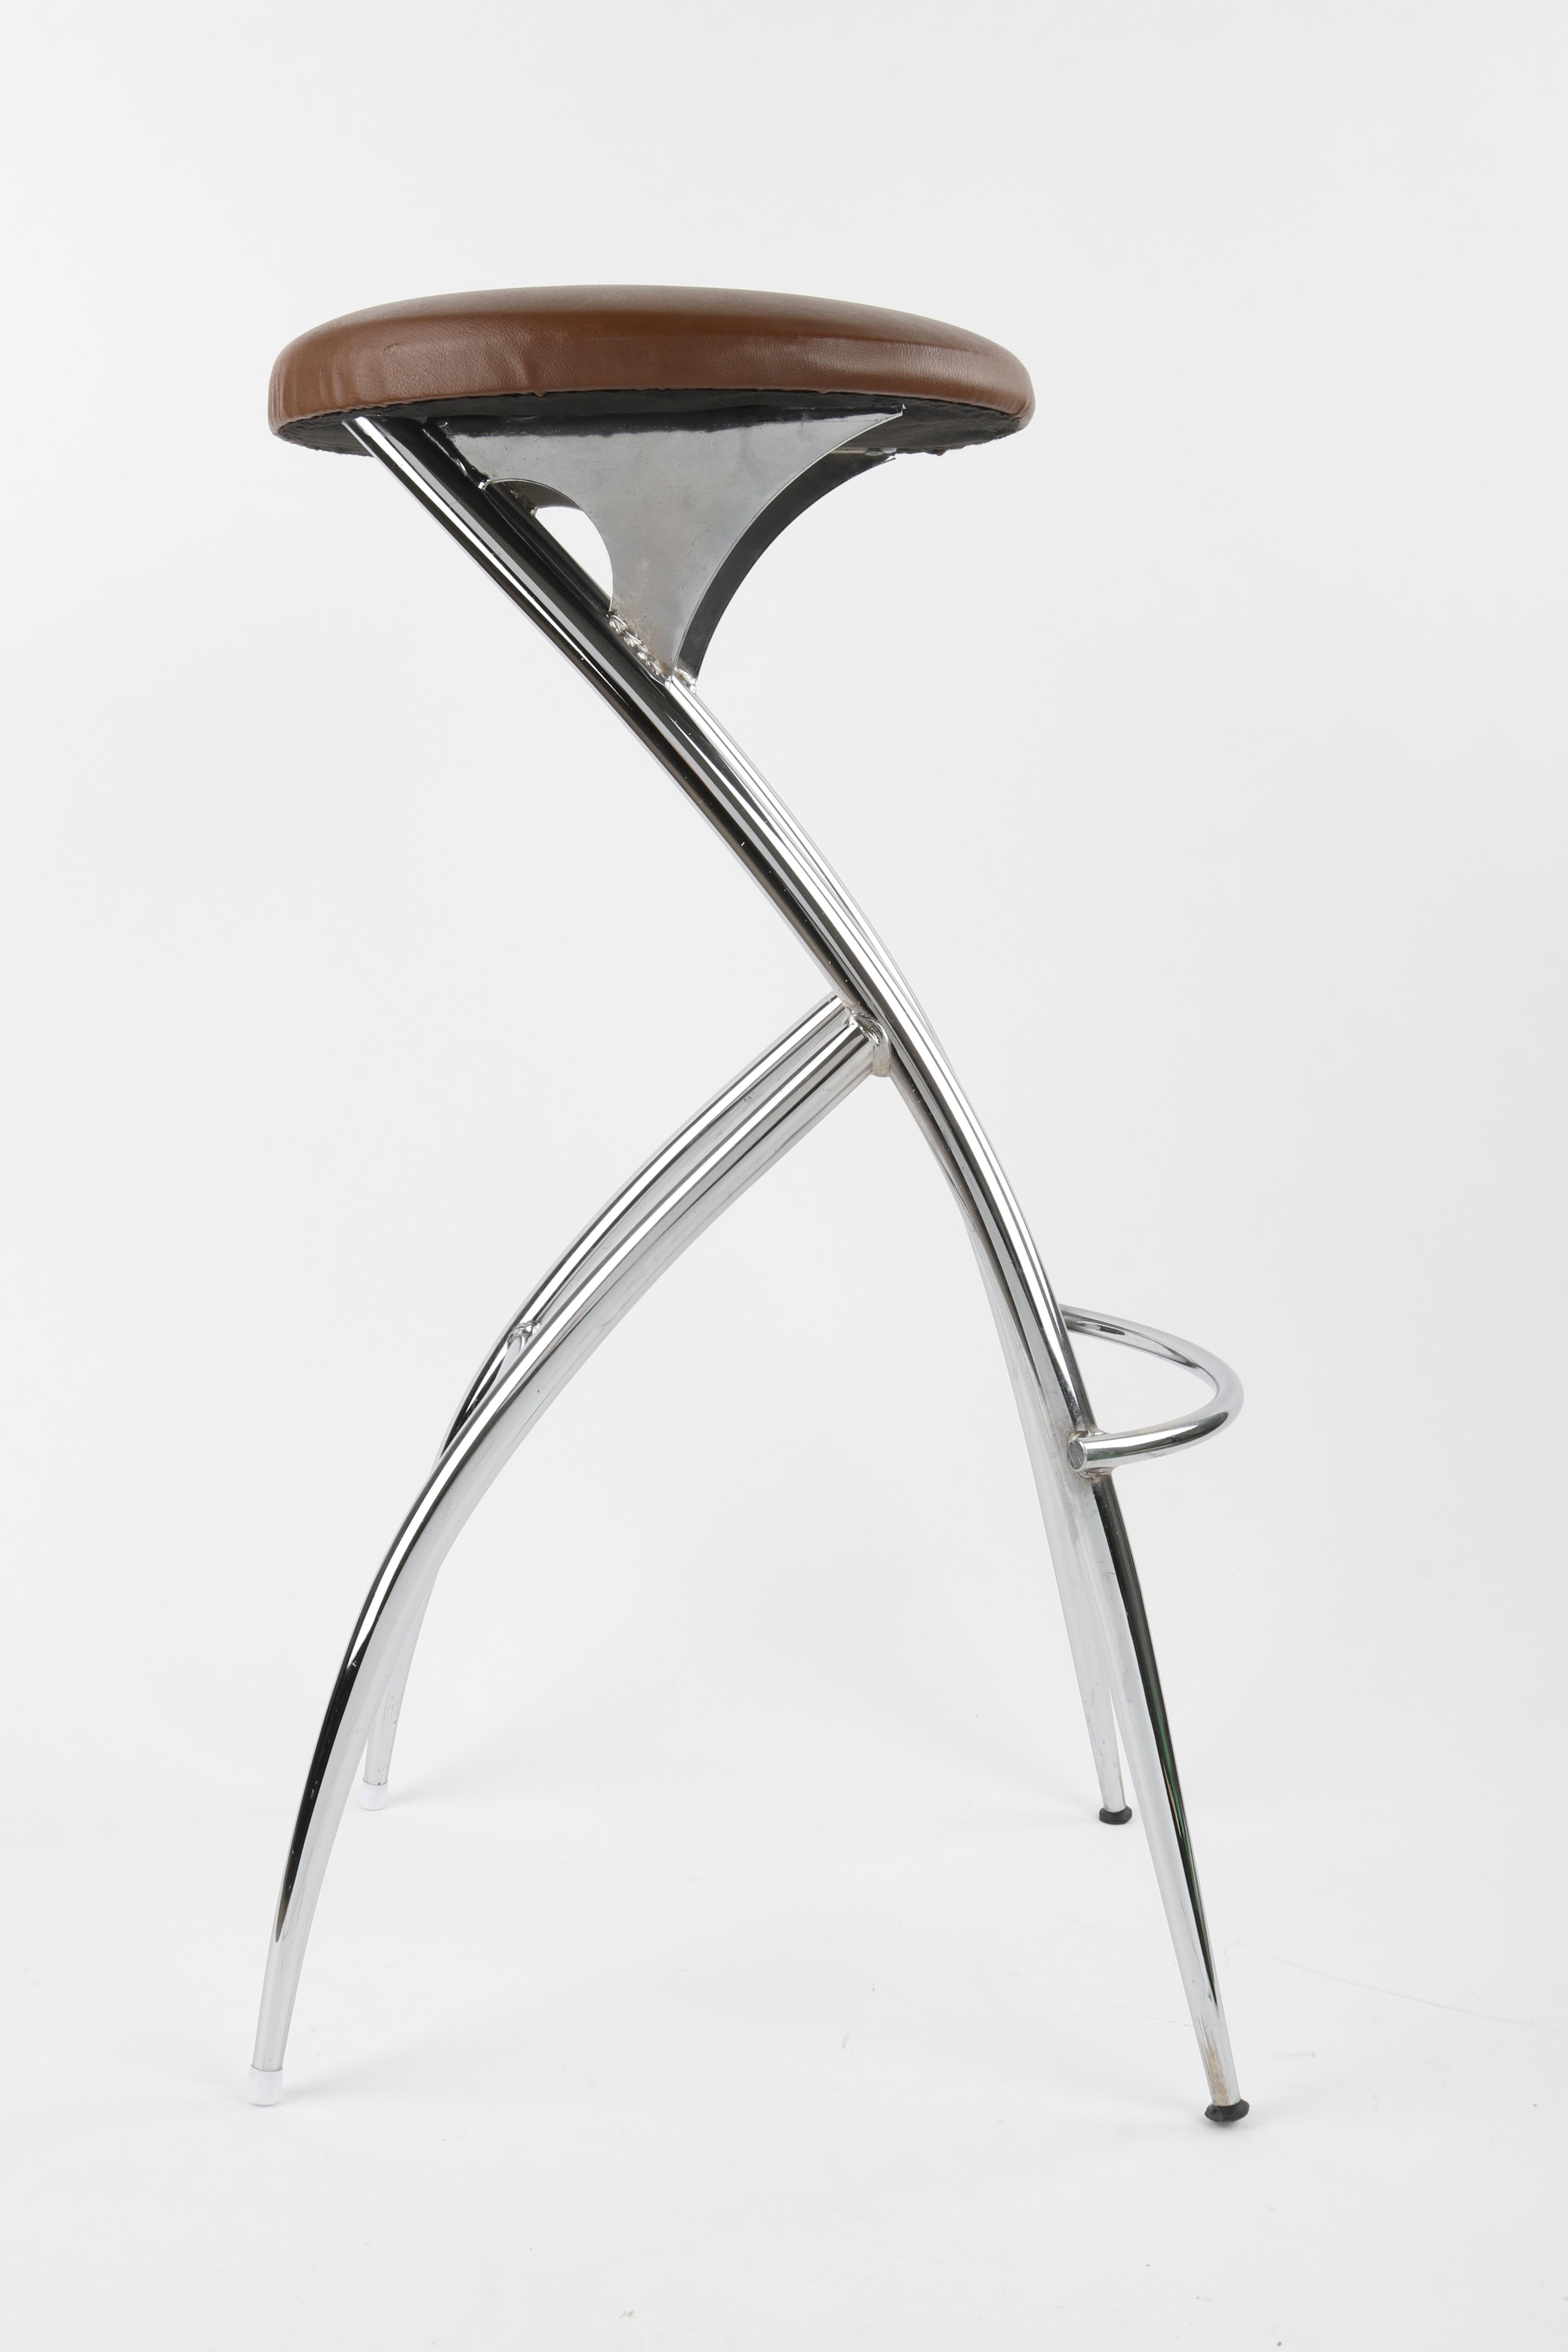 Sandler Seating c.1990s Chrome Upholstered Architectural Curved Bar Stools Set For Sale 1